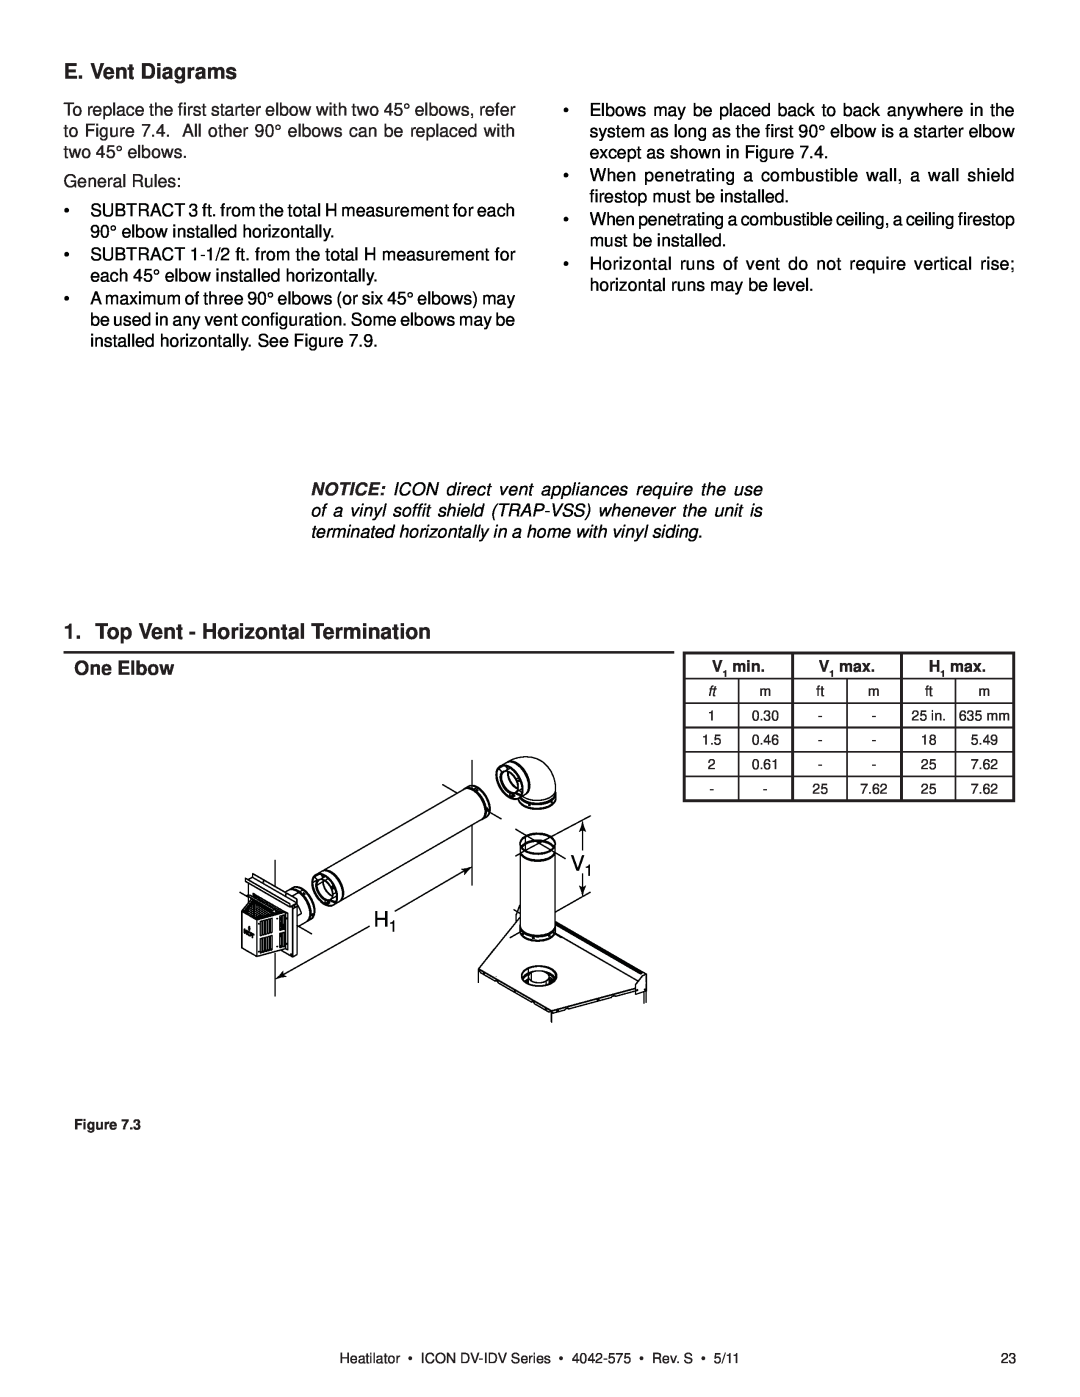 Heatiator IDV4833IT owner manual E. Vent Diagrams, Top Vent - Horizontal Termination, V1 H1, One Elbow 